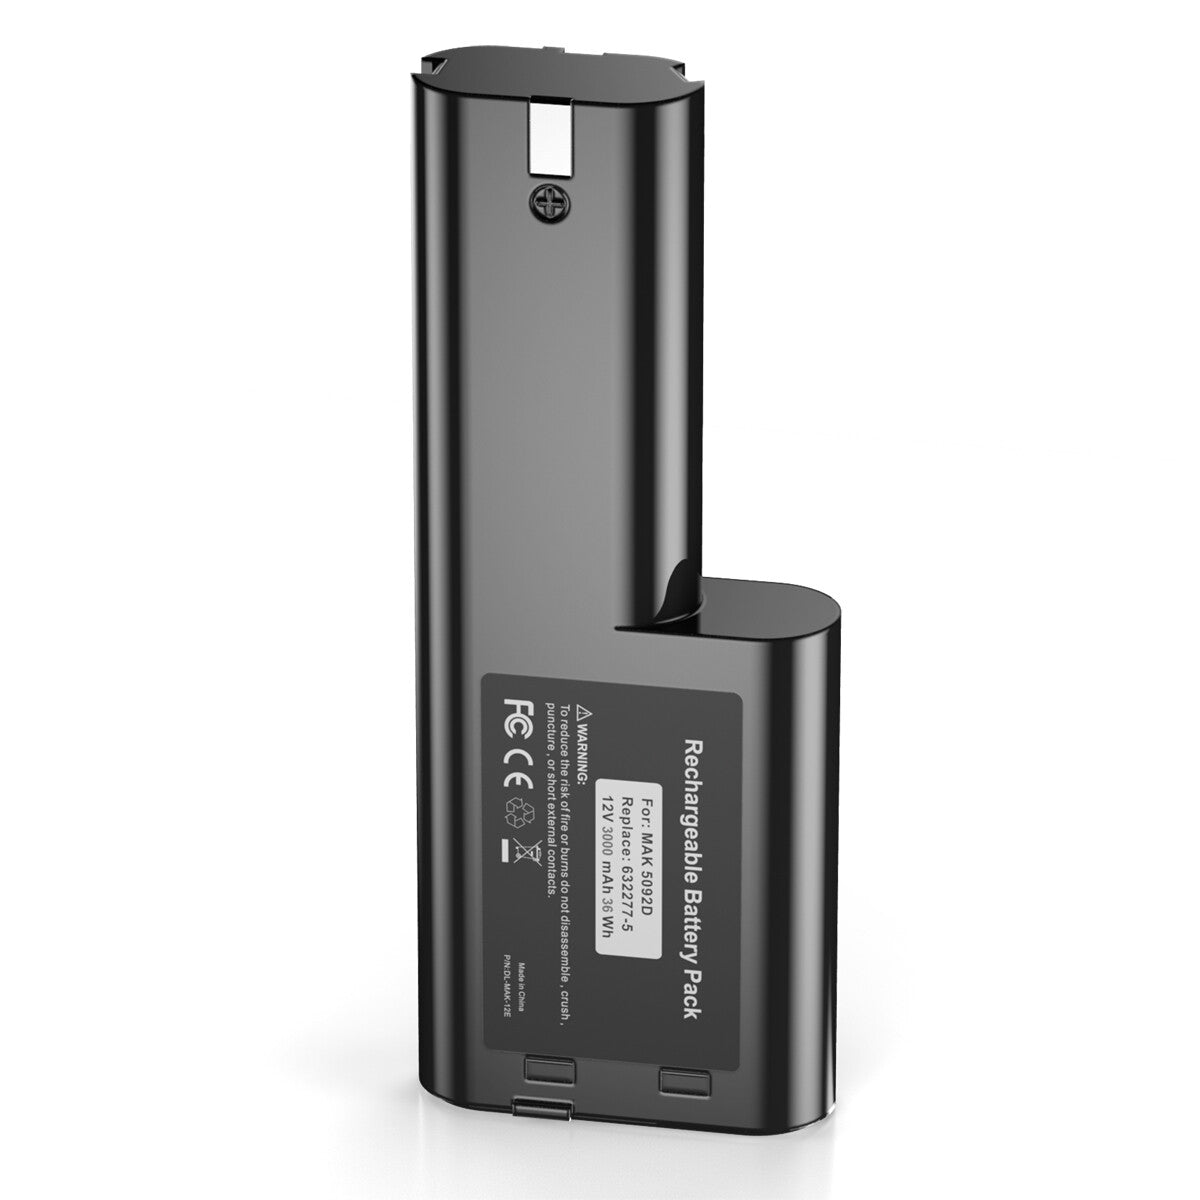  High Output 3000mAh 12V Battery for Black+Decker 12